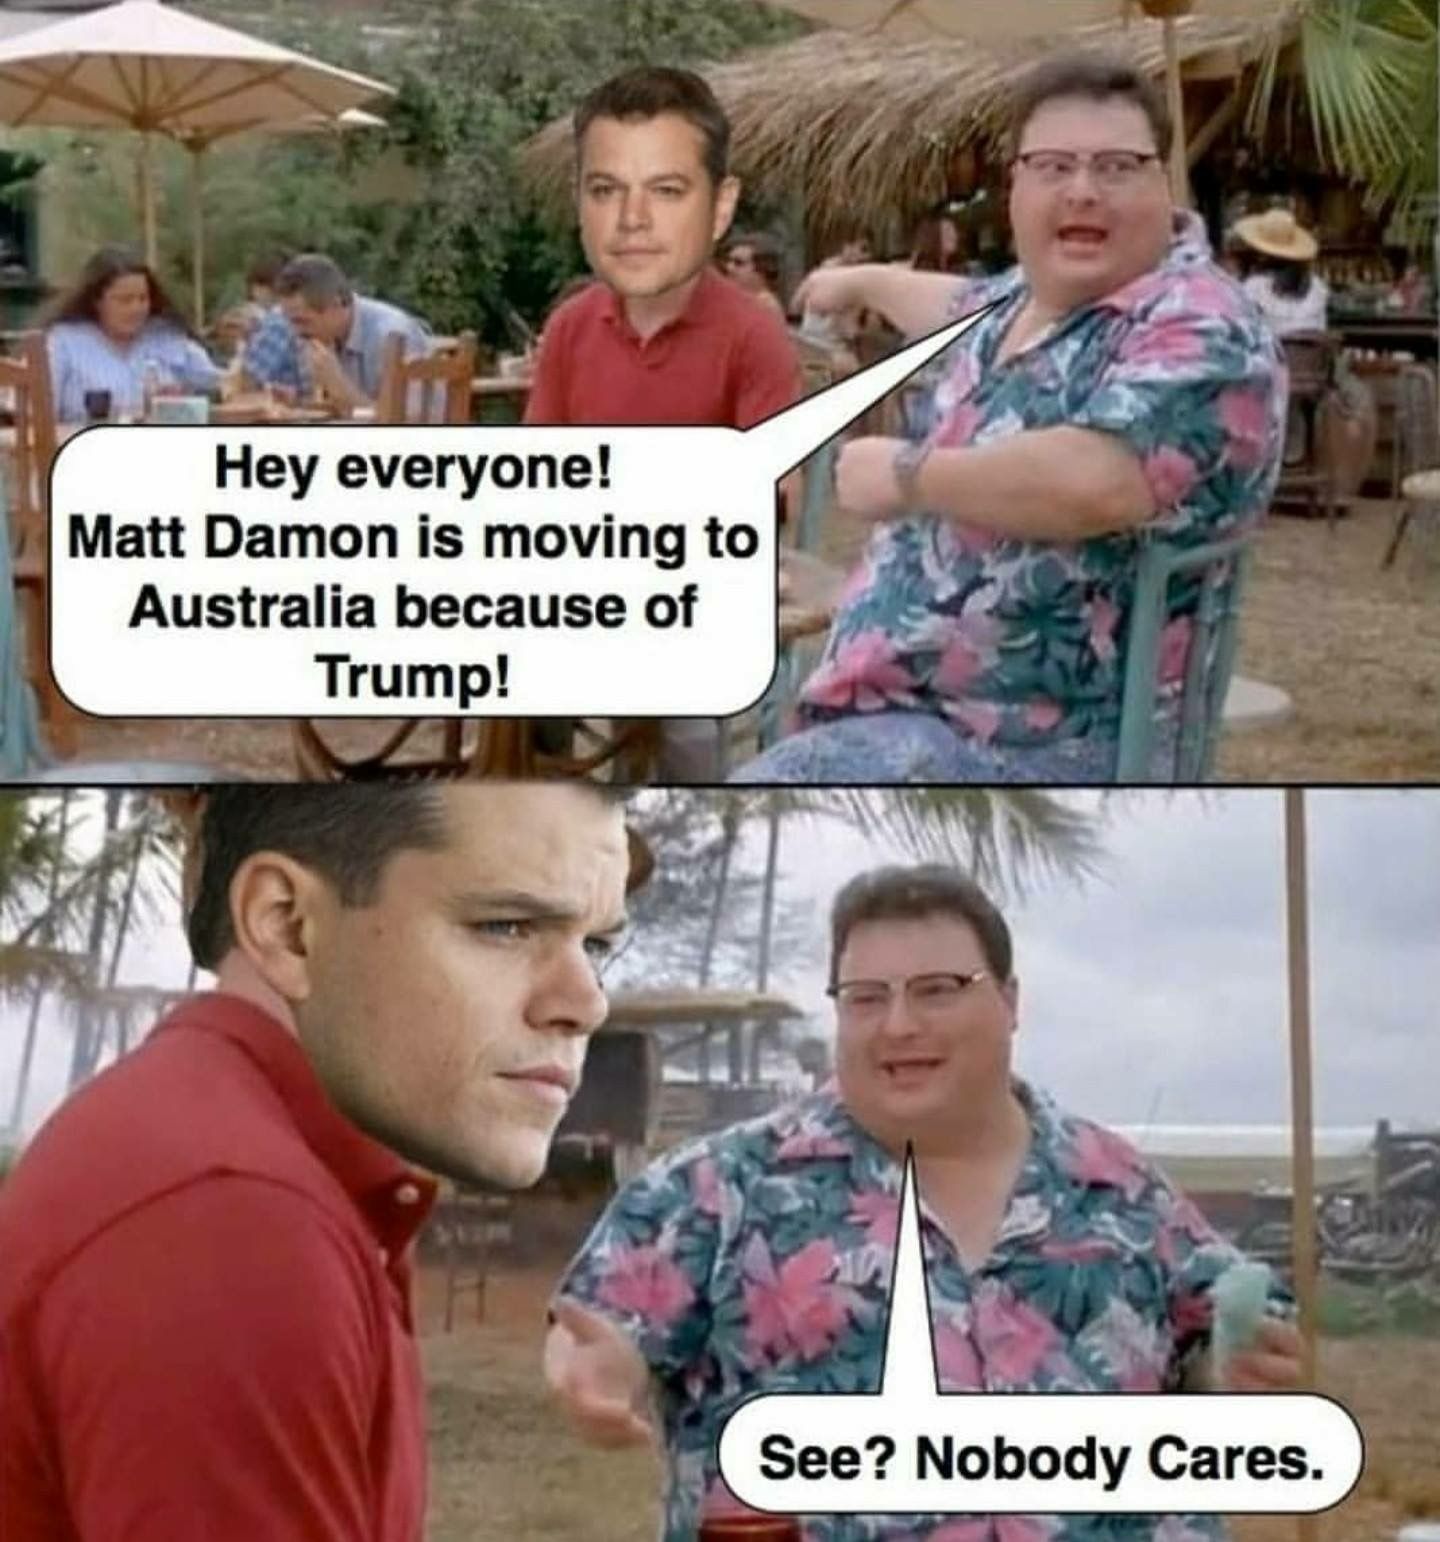 Matt Damon is moving to Australia. 